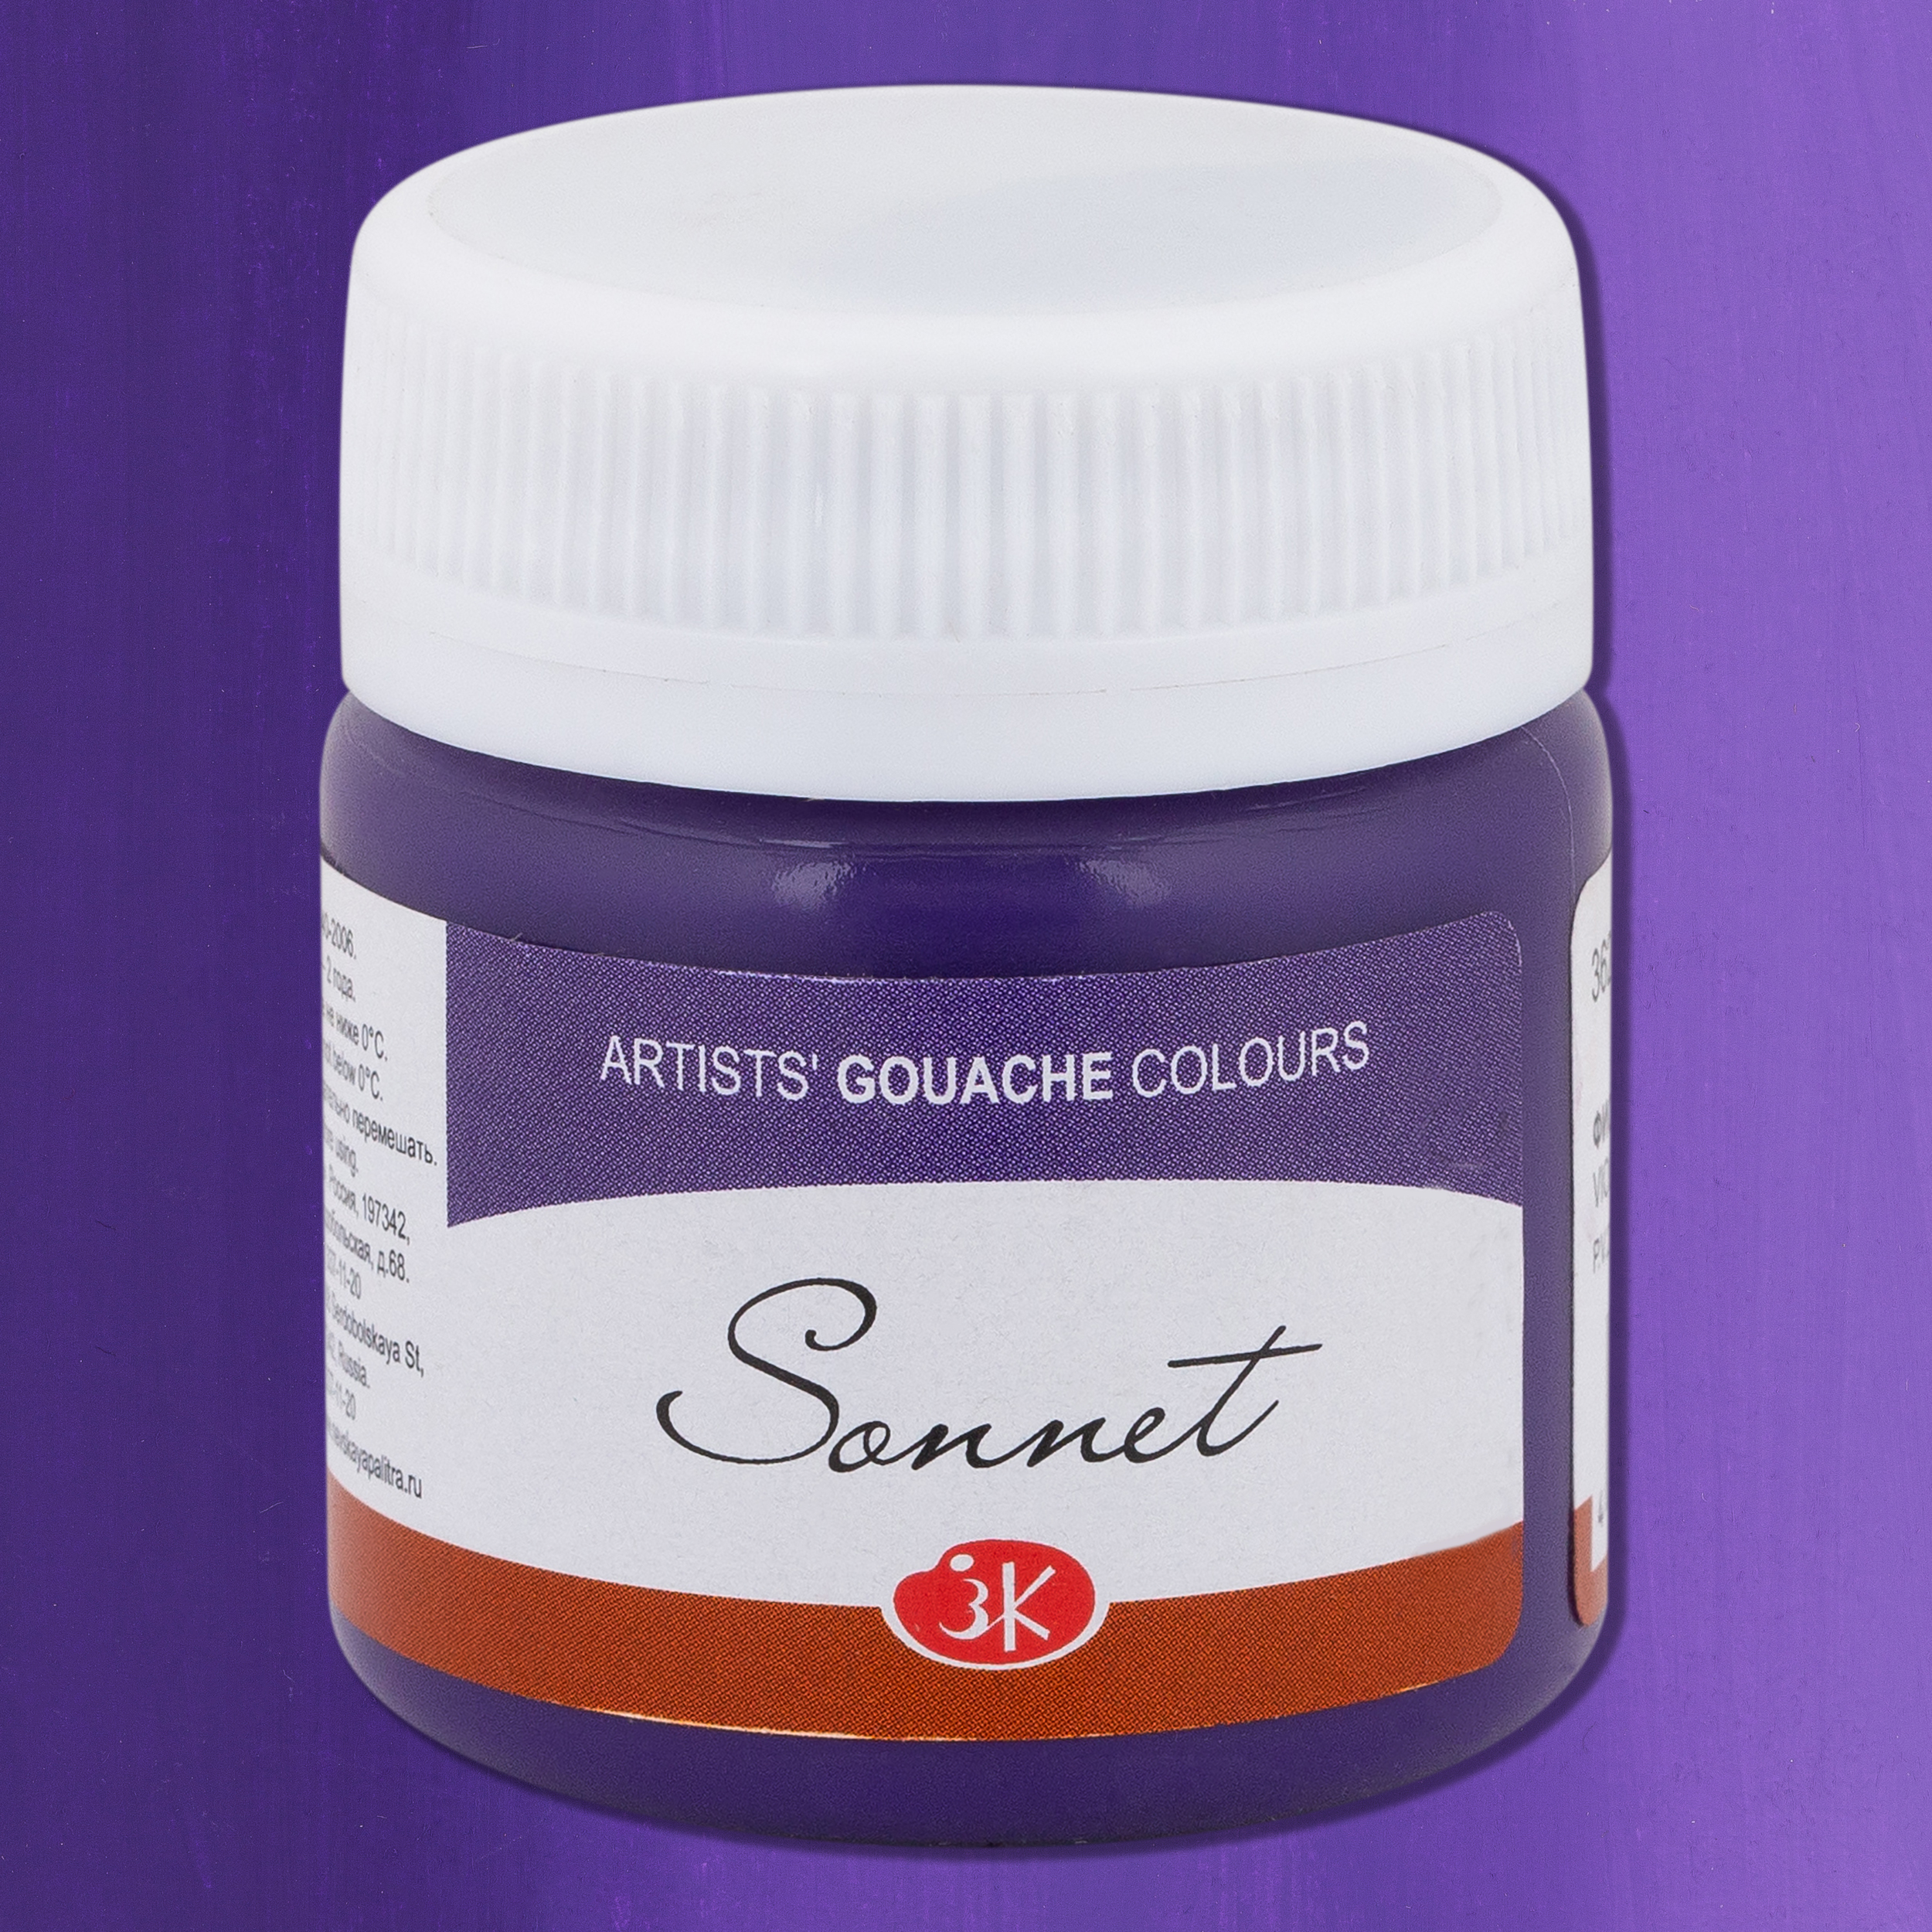 Gouache Violet "Sonnet" in the jar, 40 ml. № 607